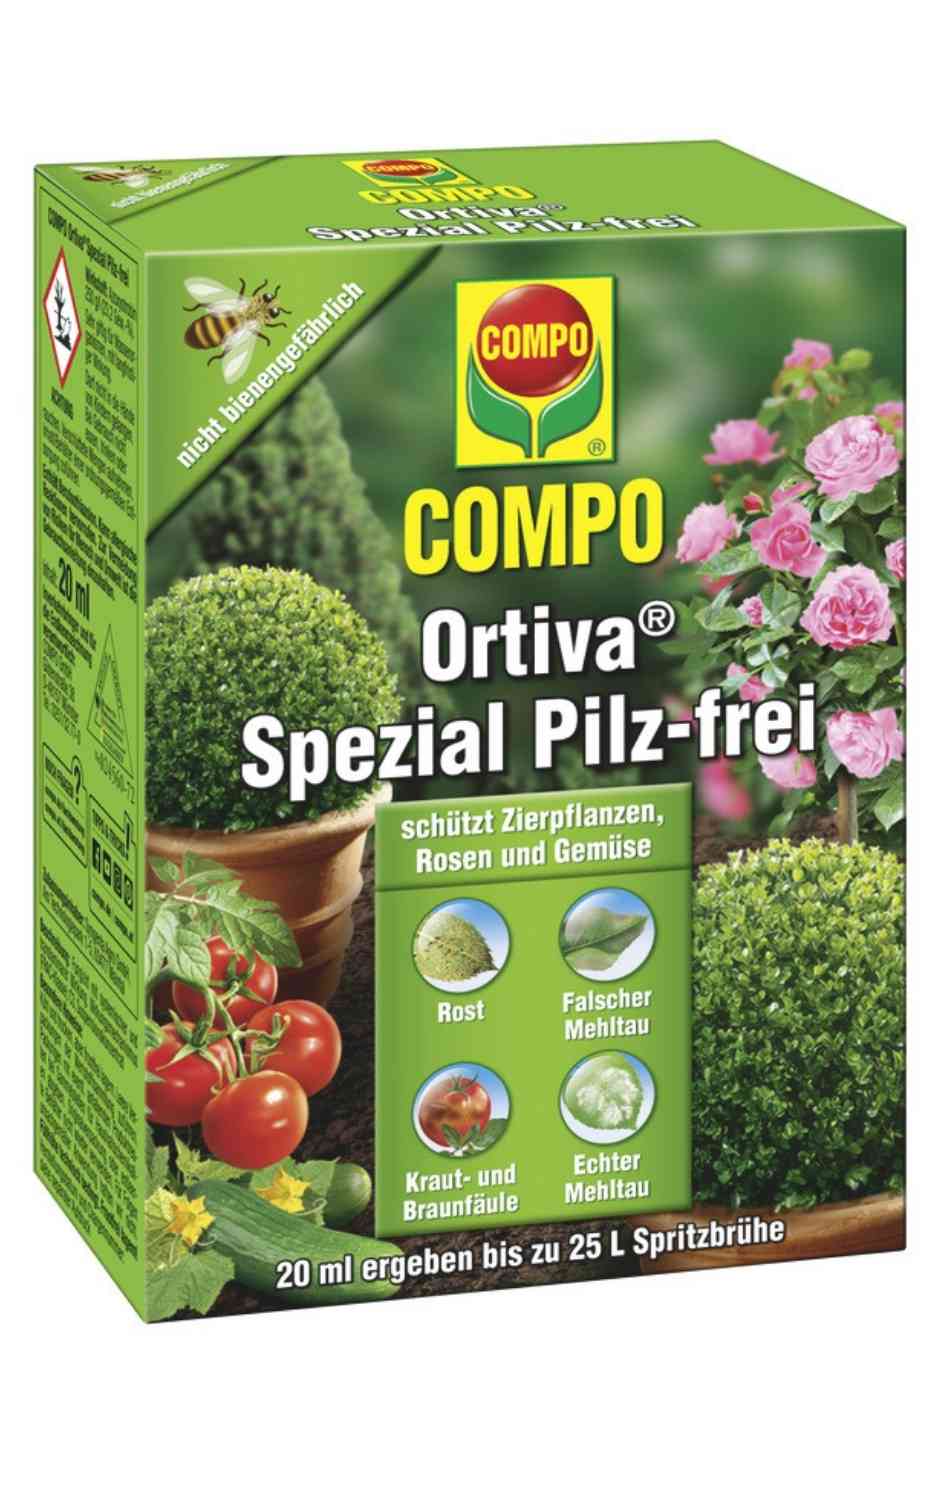 COMPO Ortiva Spezial Pilz-frei